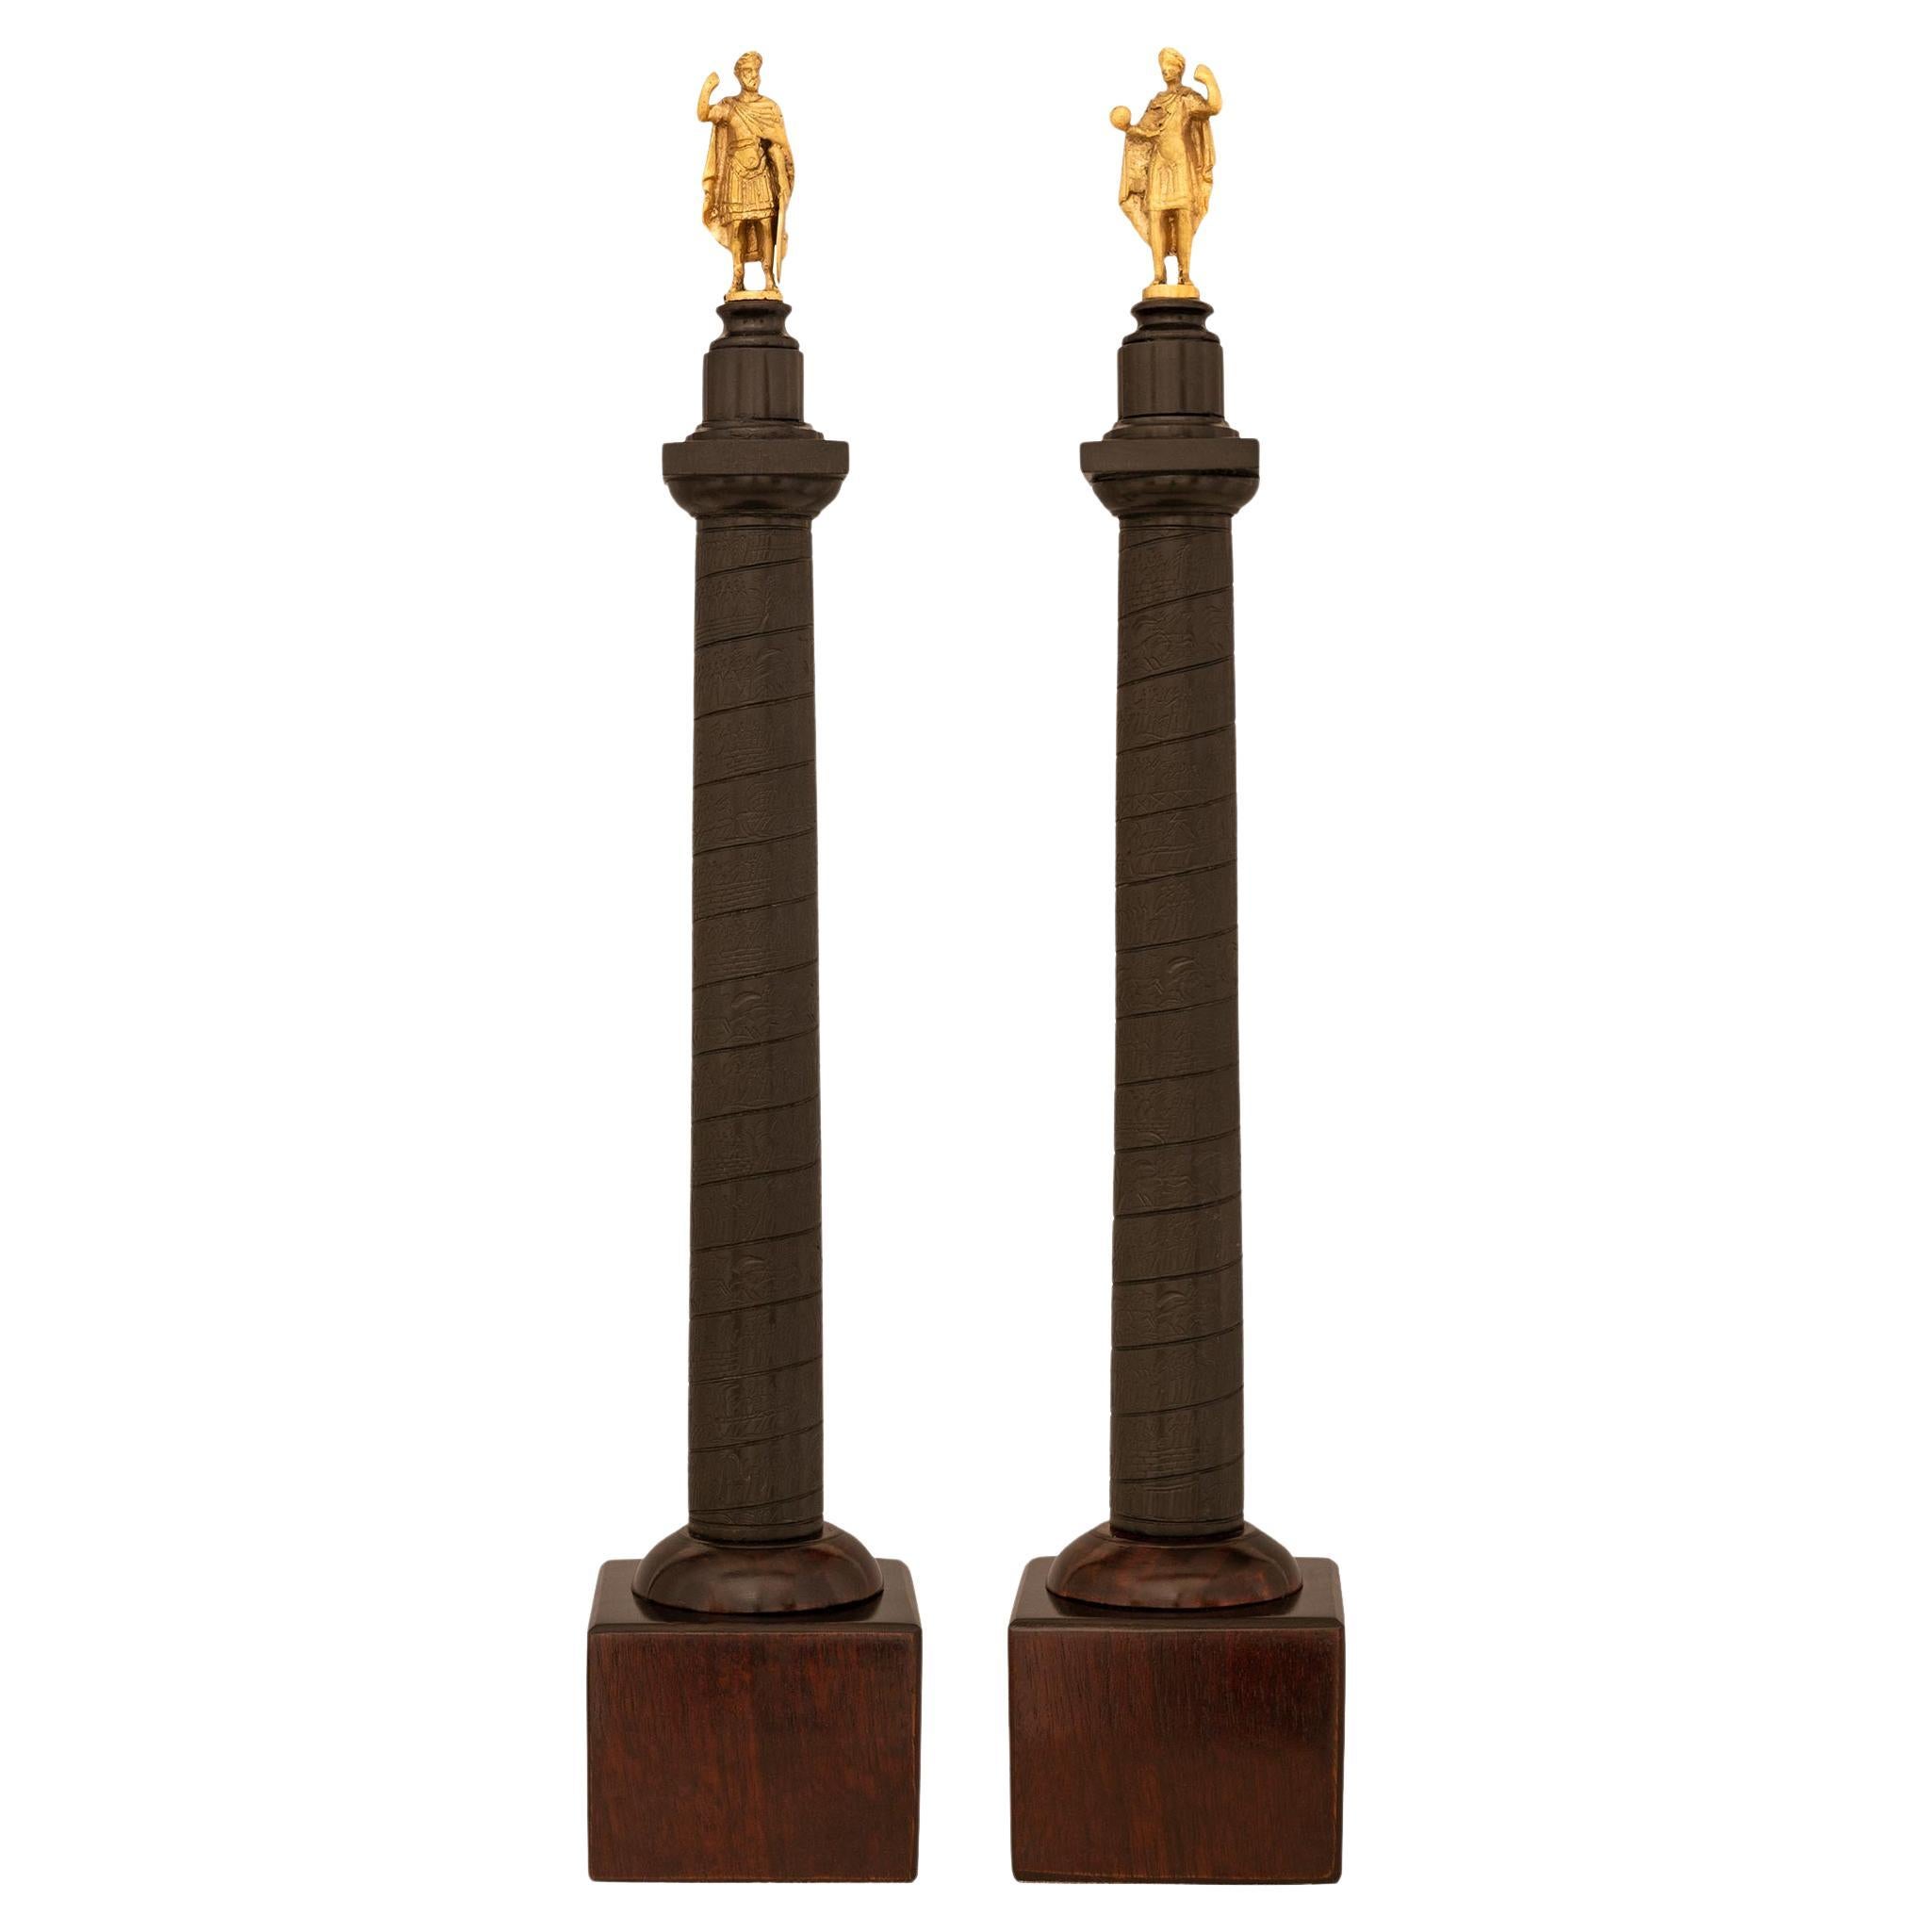 pair of Italian 19th century Ormolu, Mahogany, and bronze statues/columns